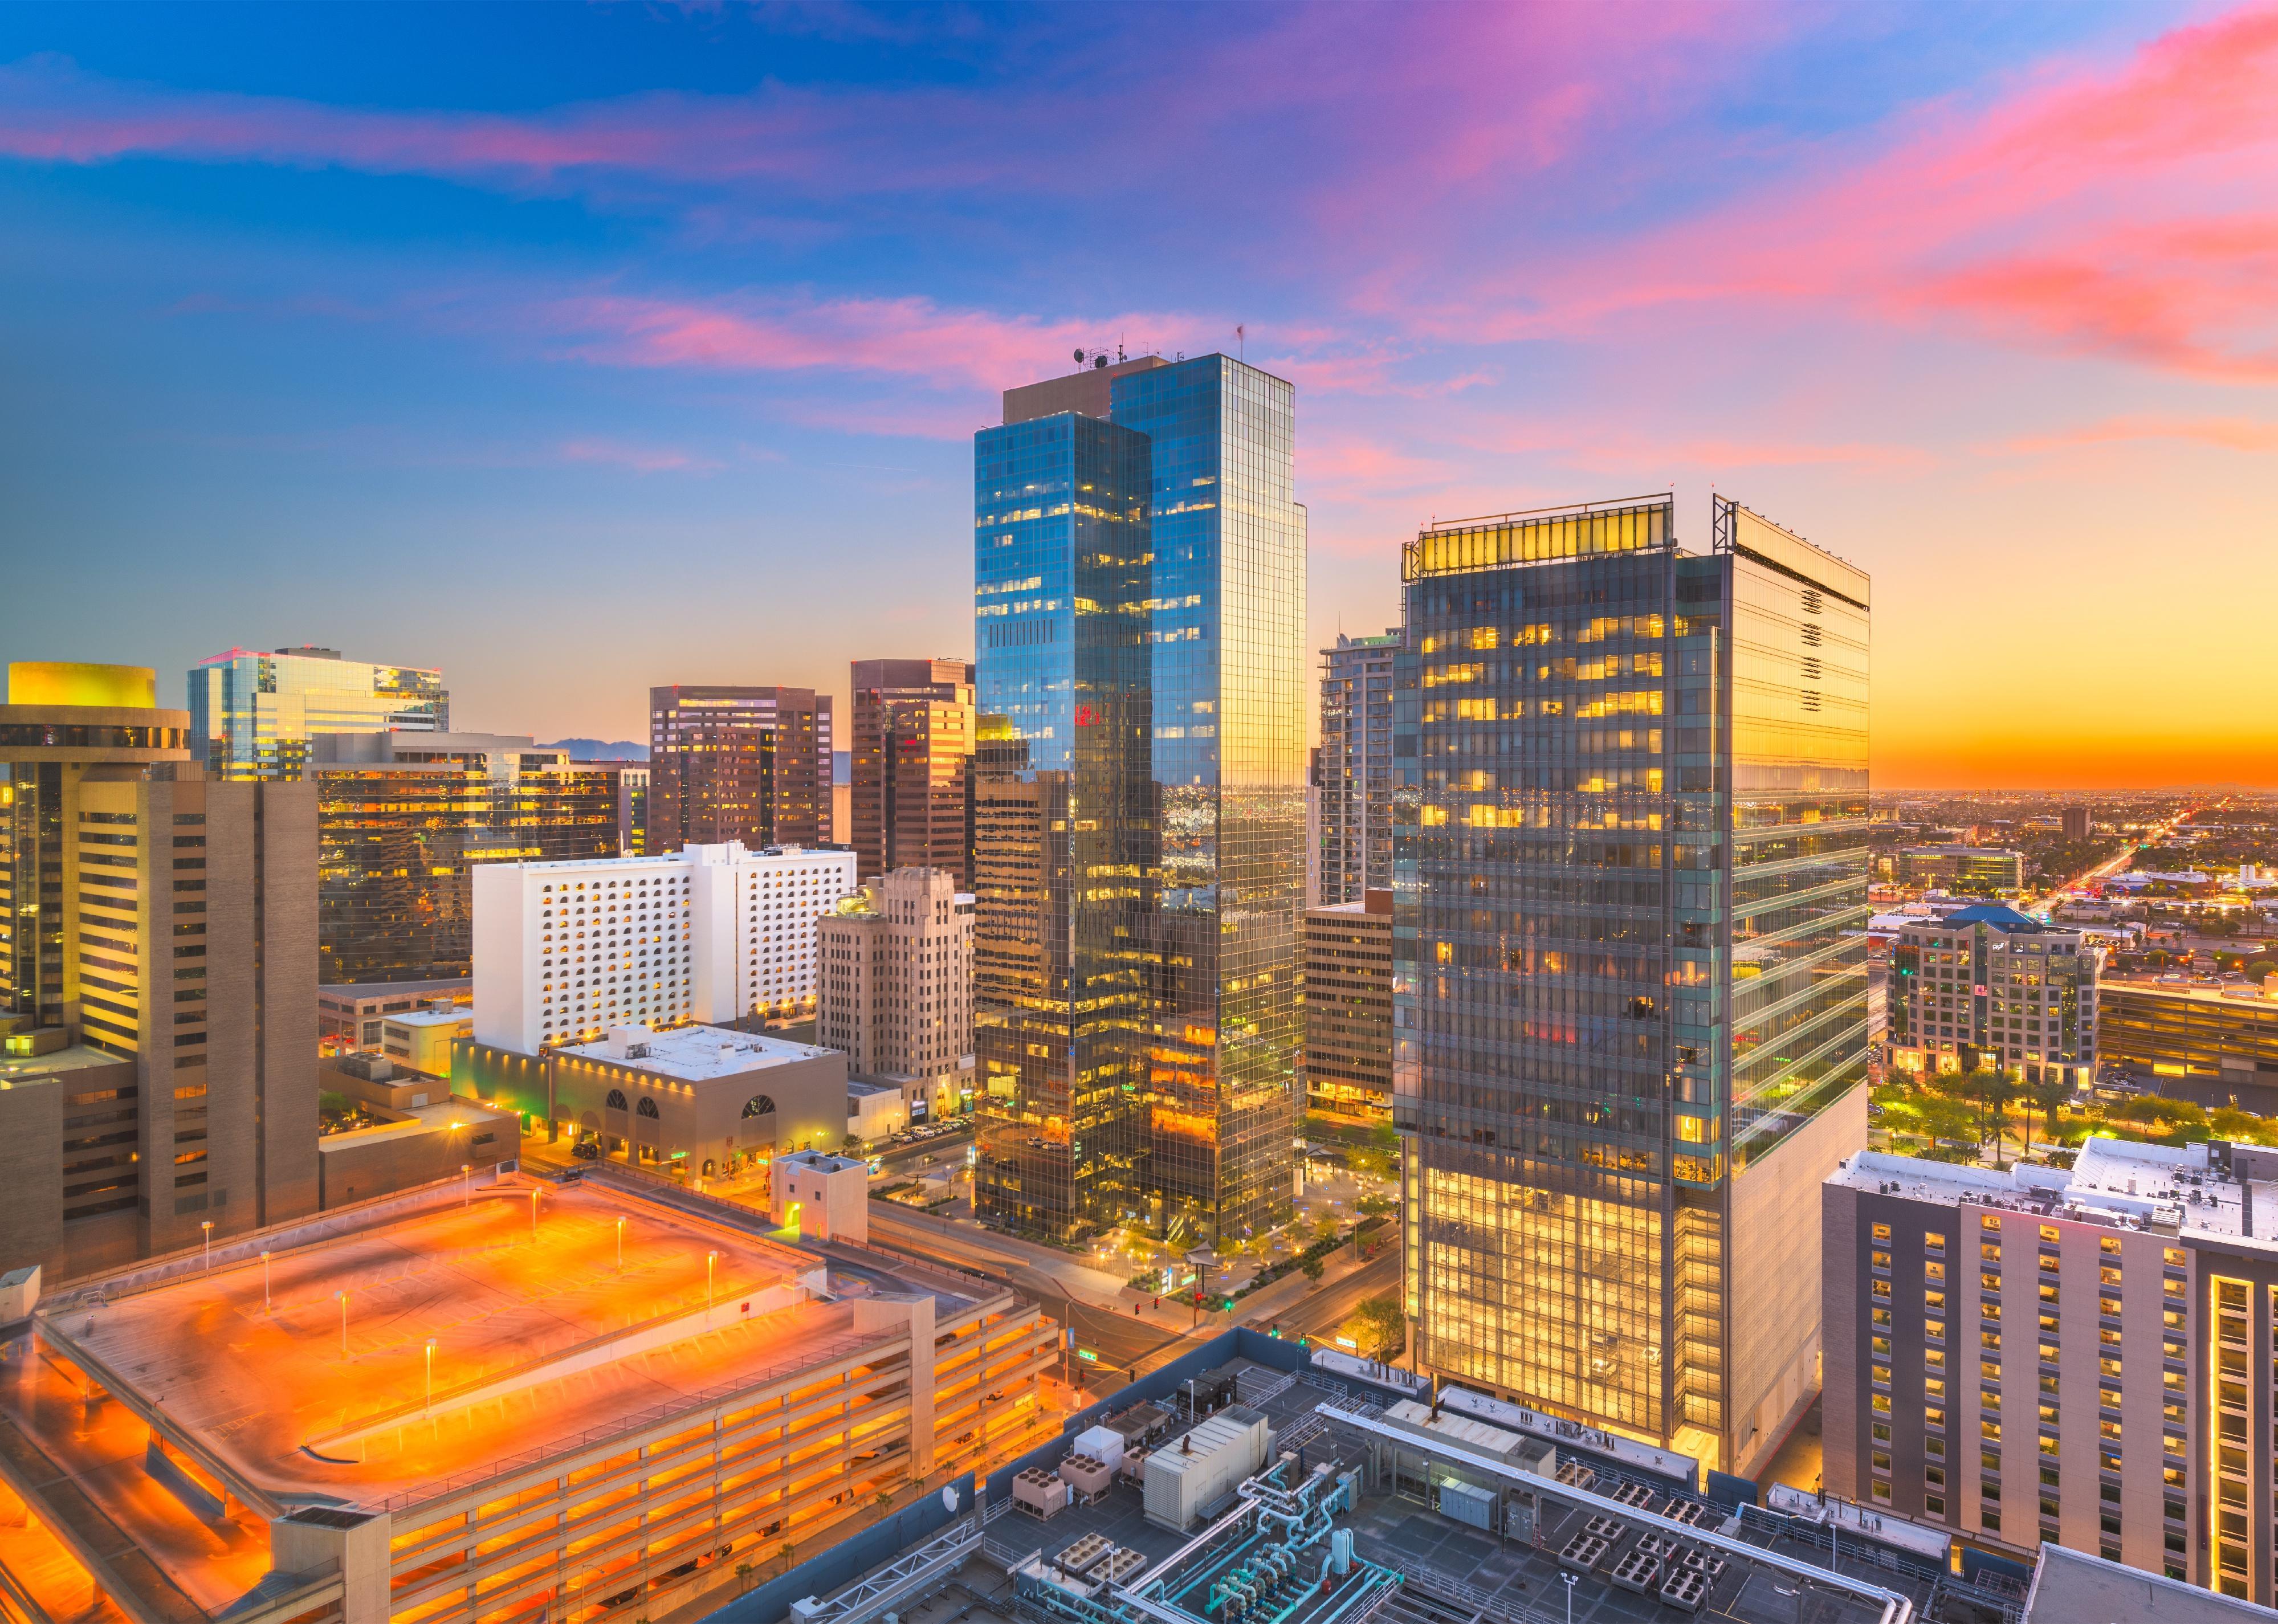 Twilight descends over downtown Phoenix.